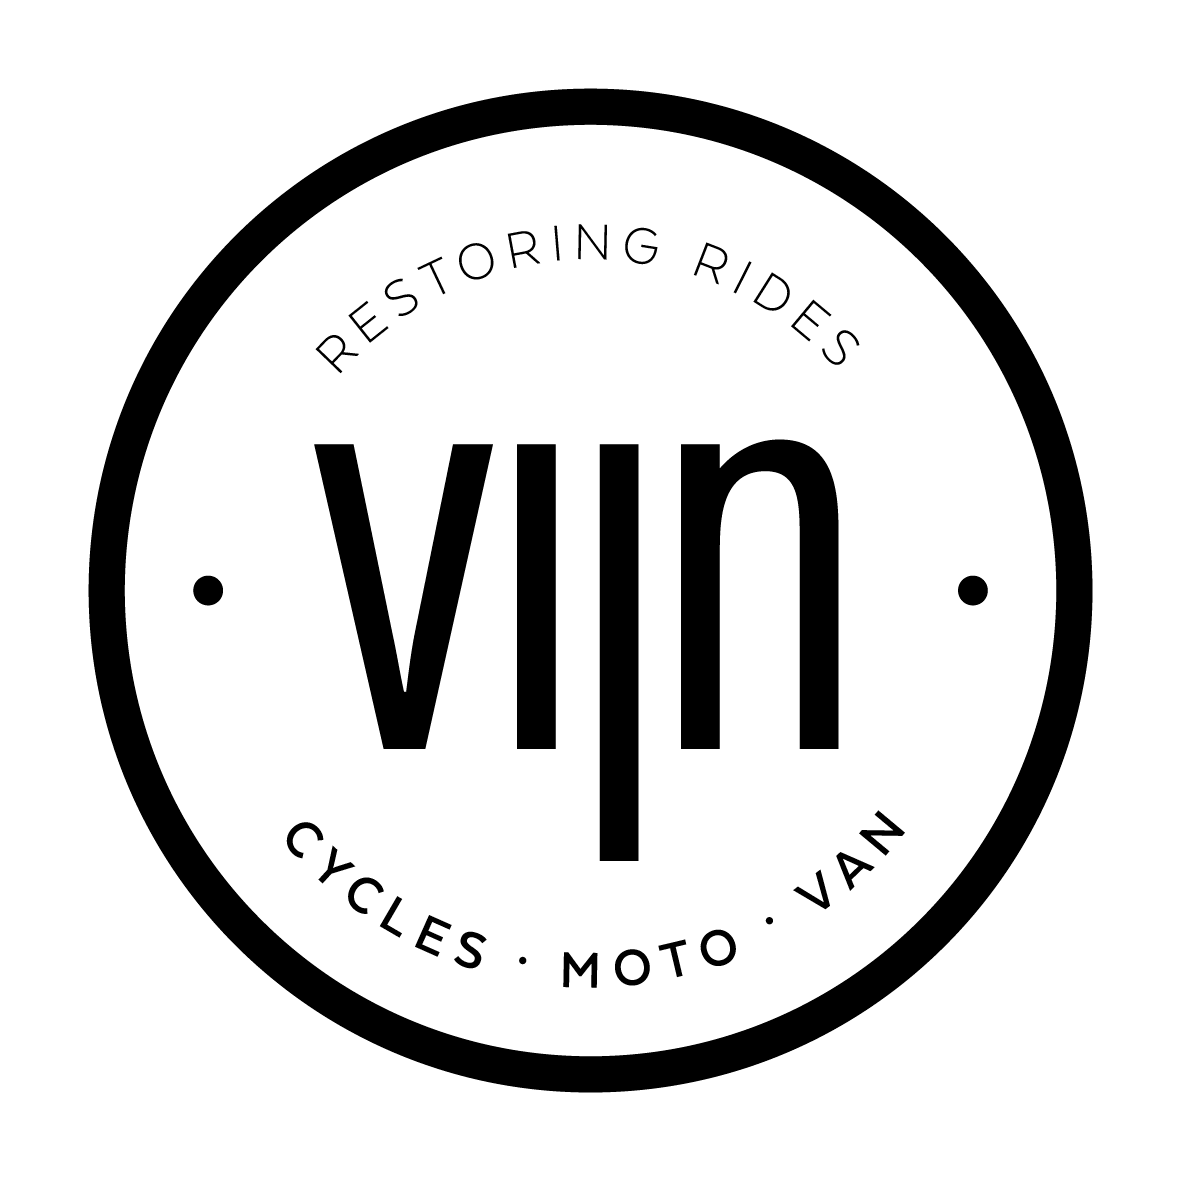 black and white logo, circle with type vijn moto cycle van text